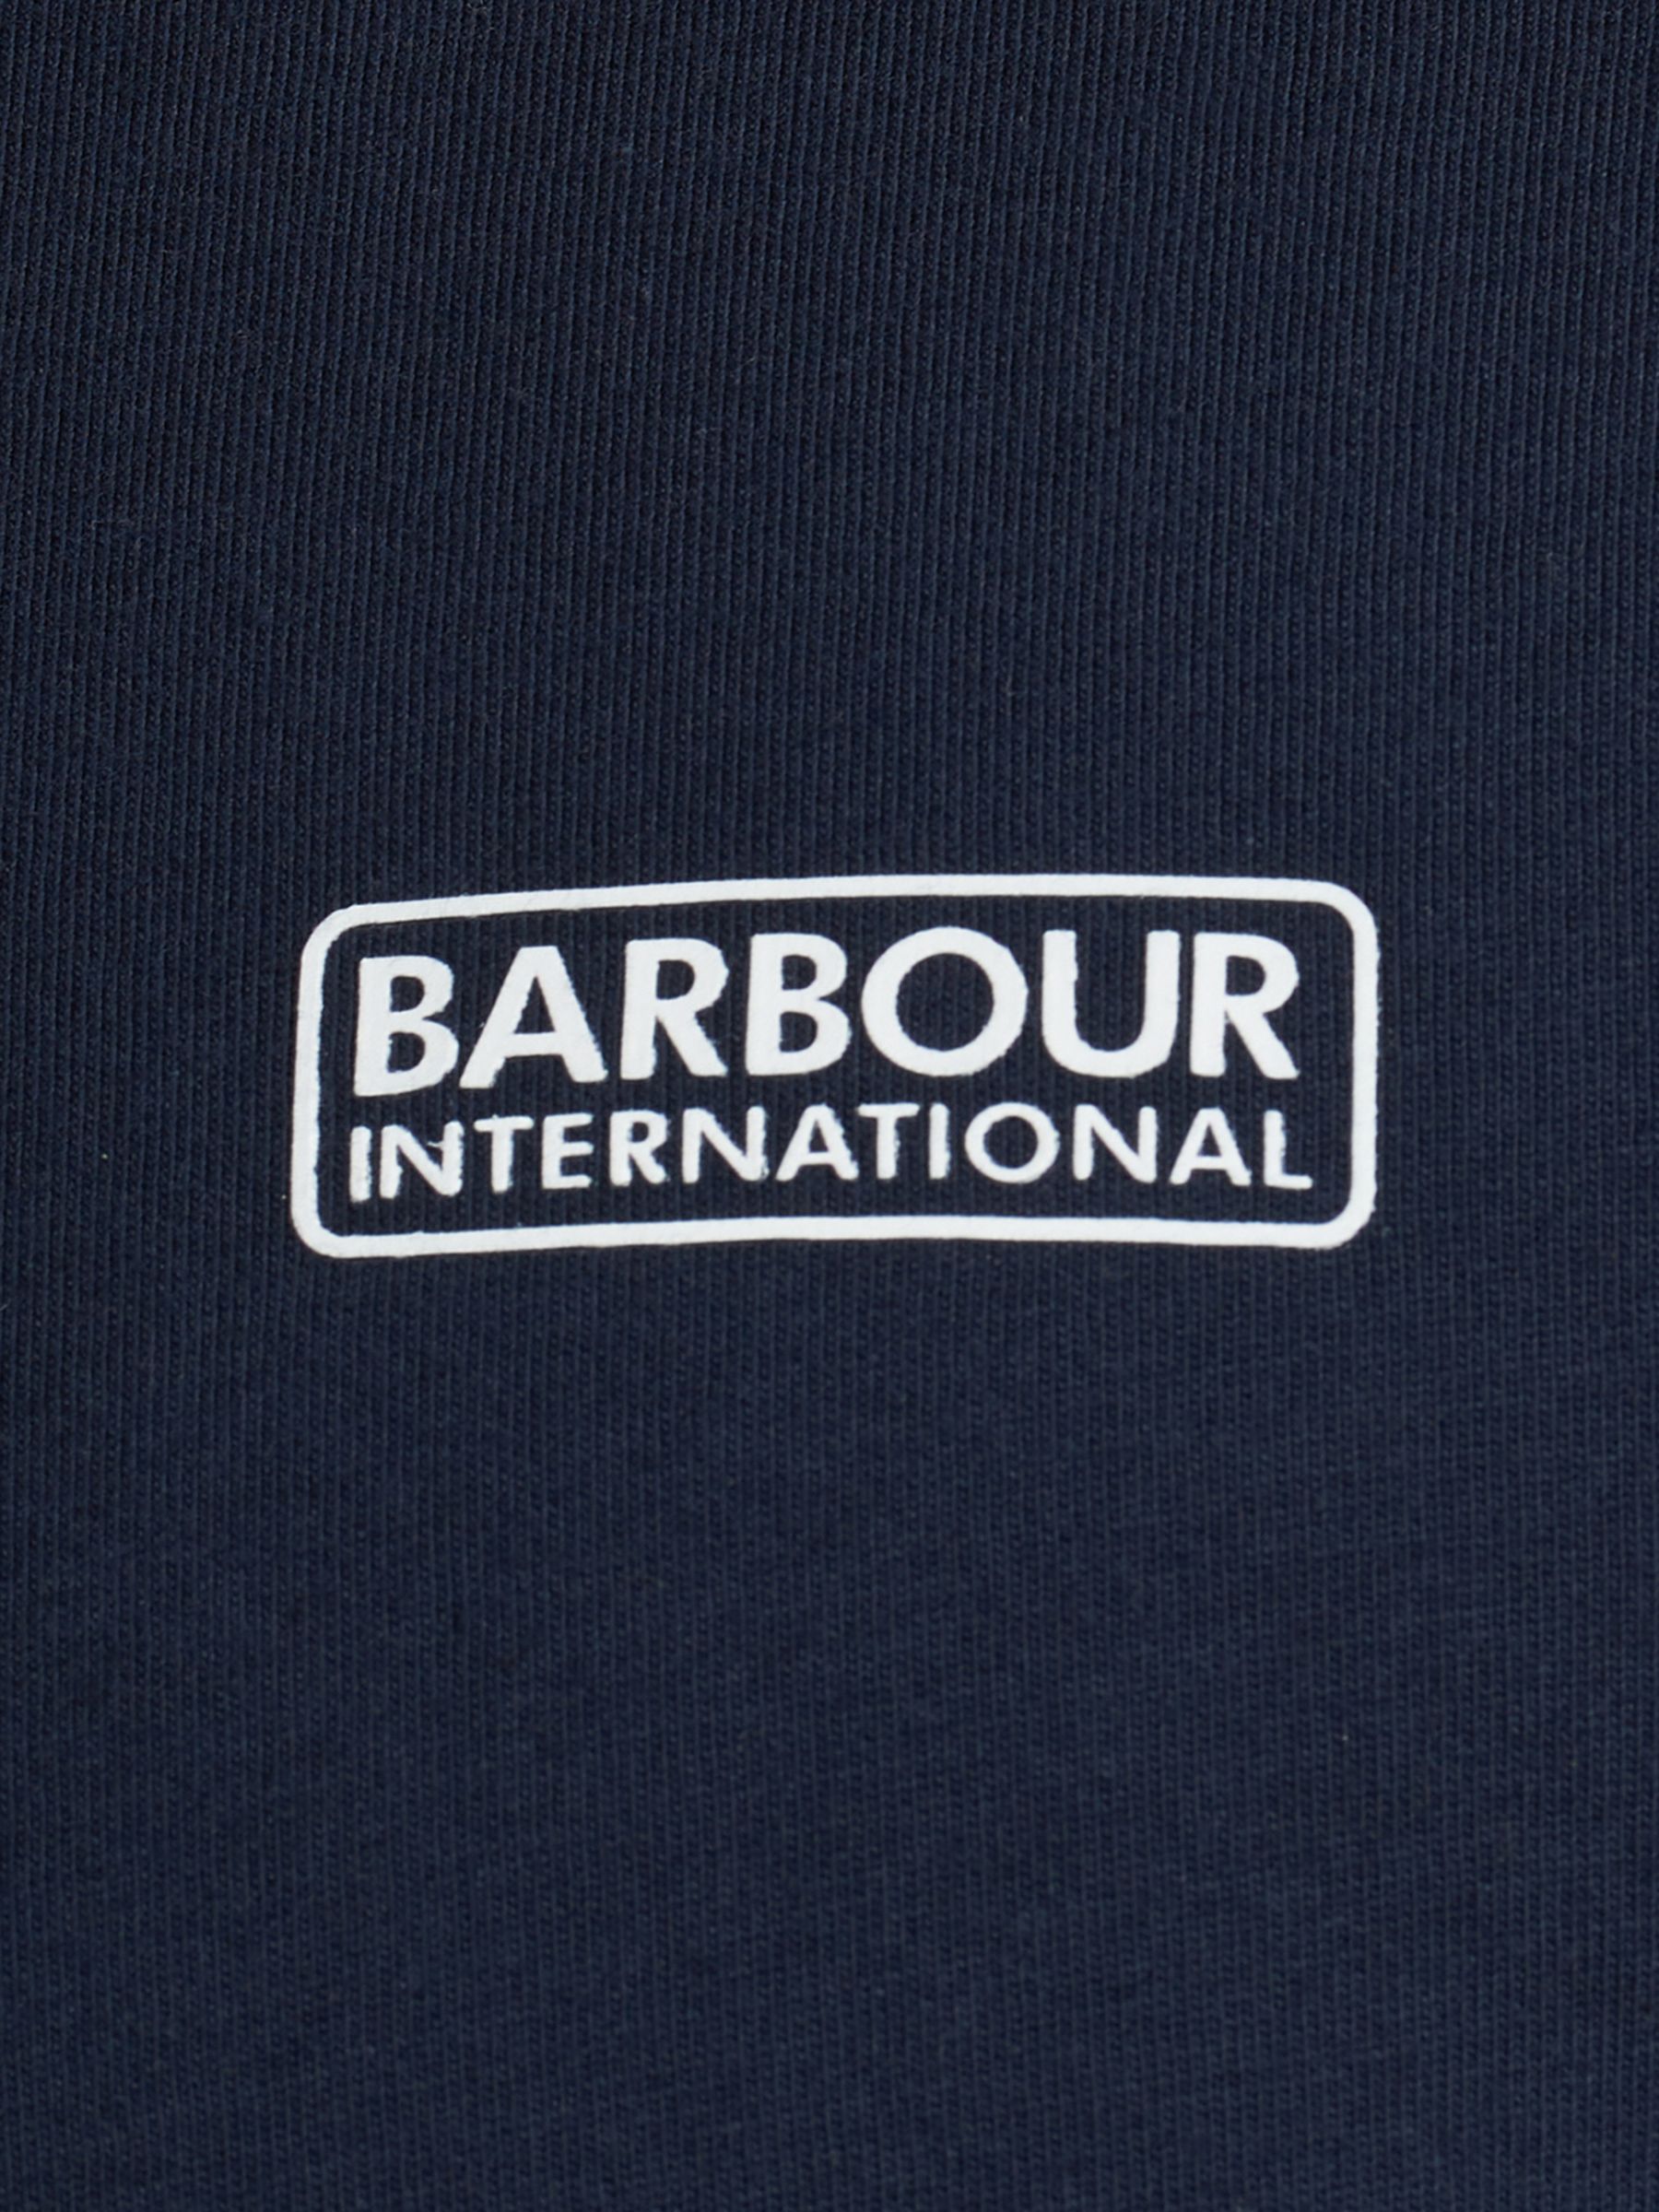 Buy Barbour International Slim Fit Crew T-Shirt Online at johnlewis.com